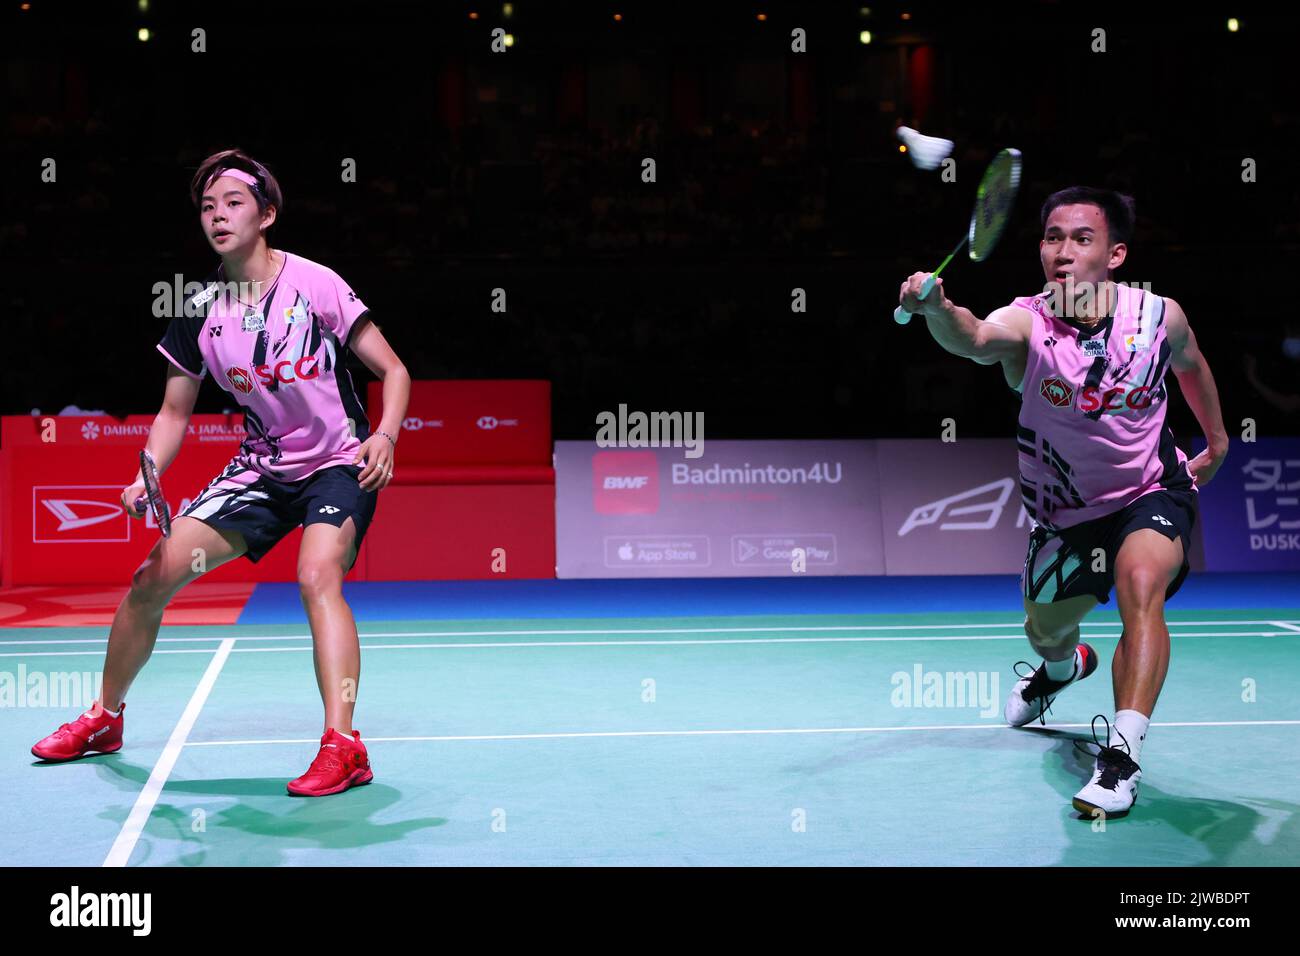 badminton mixed doubles live